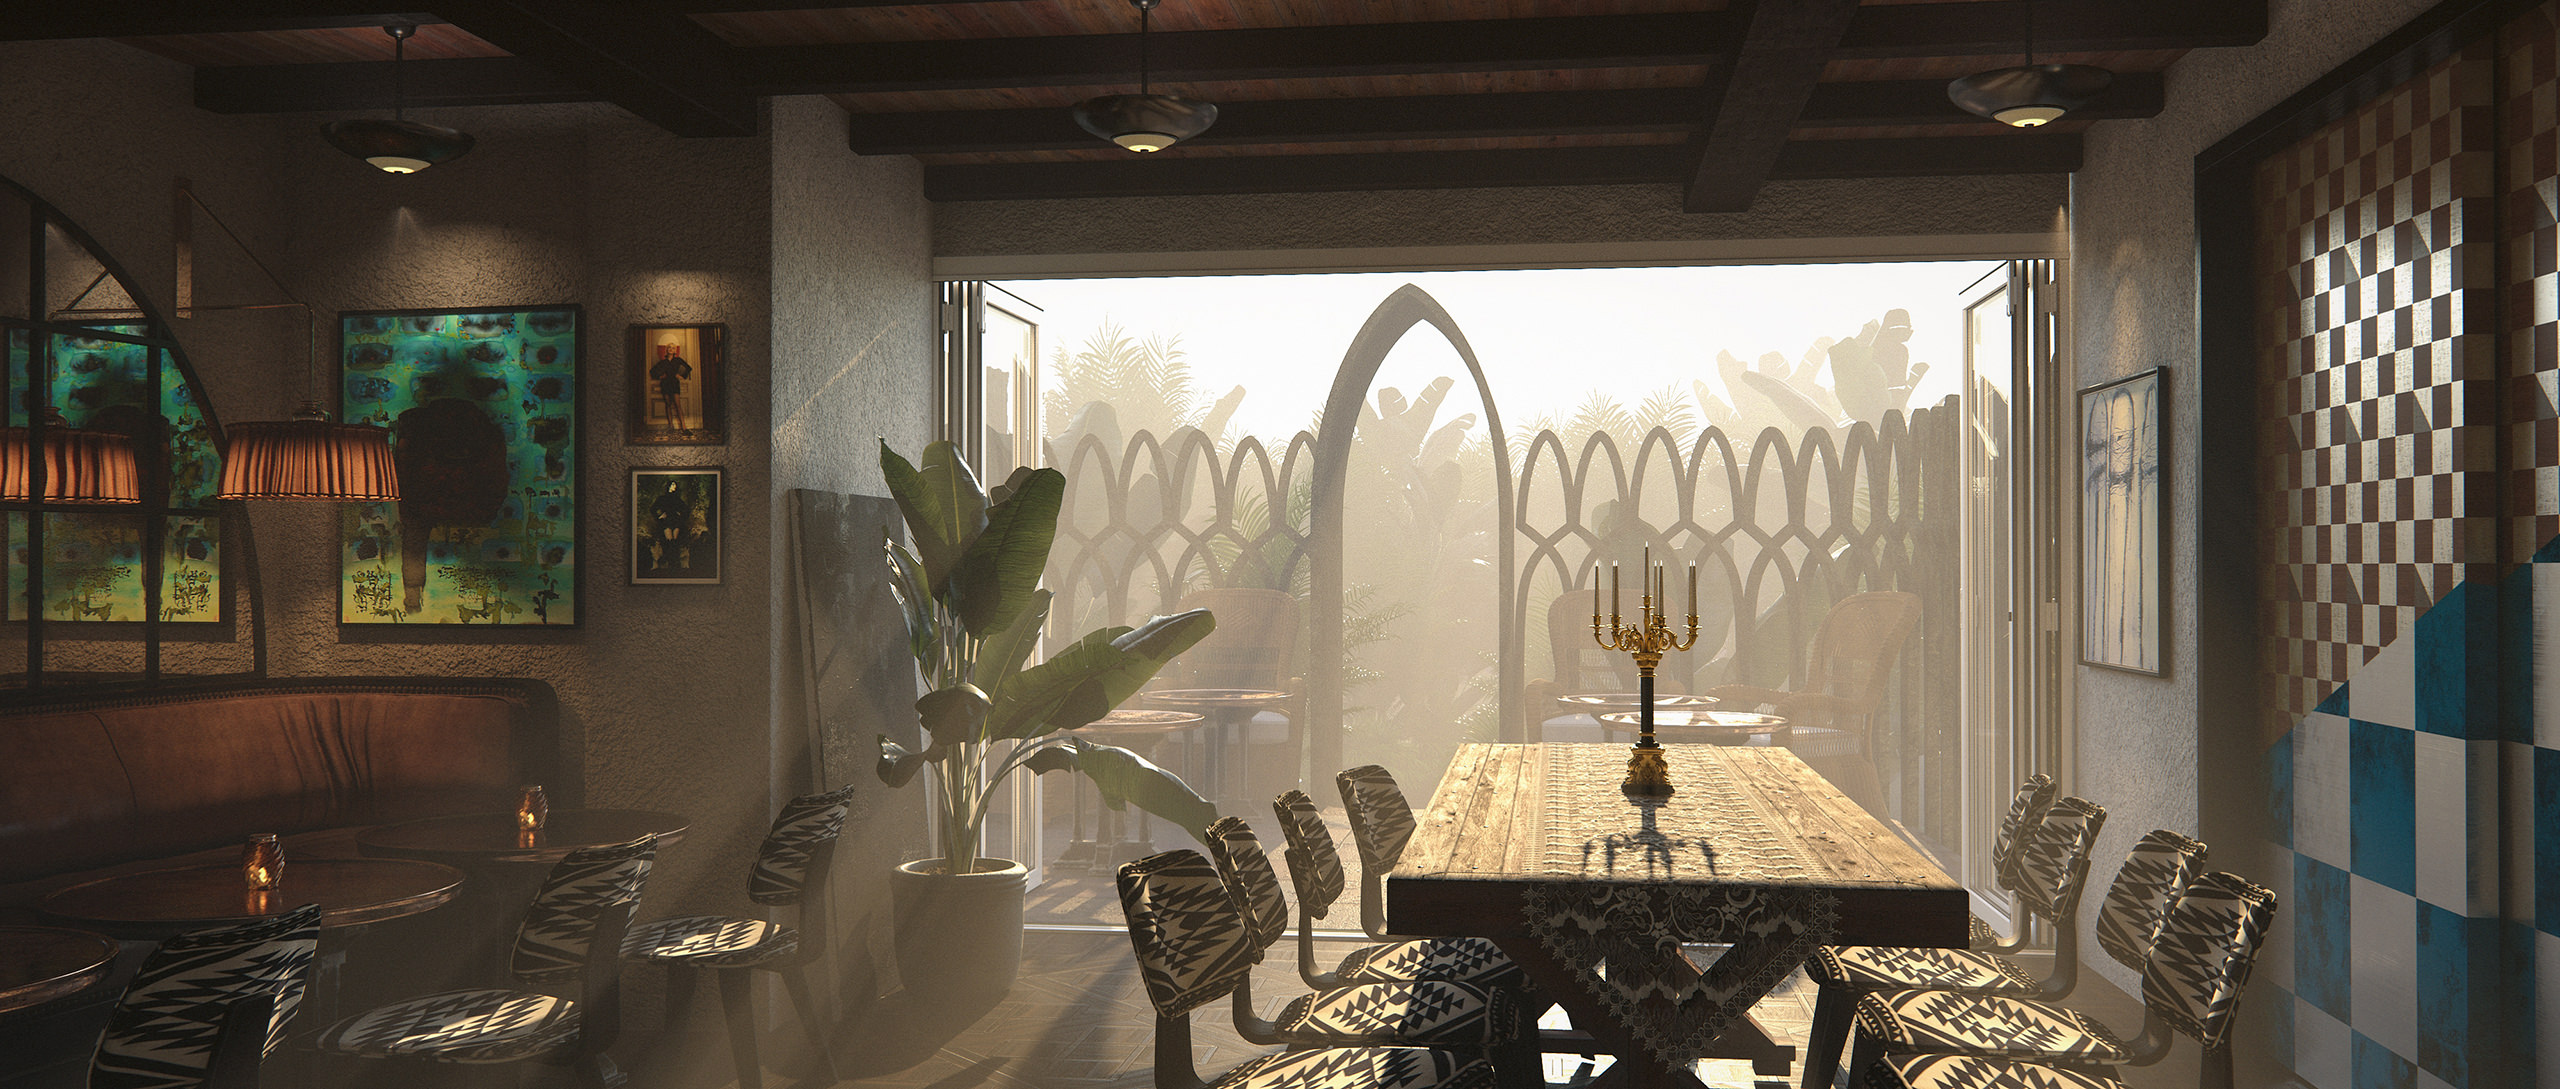 3D interior restaurant terrace visualization bathed in sunlight